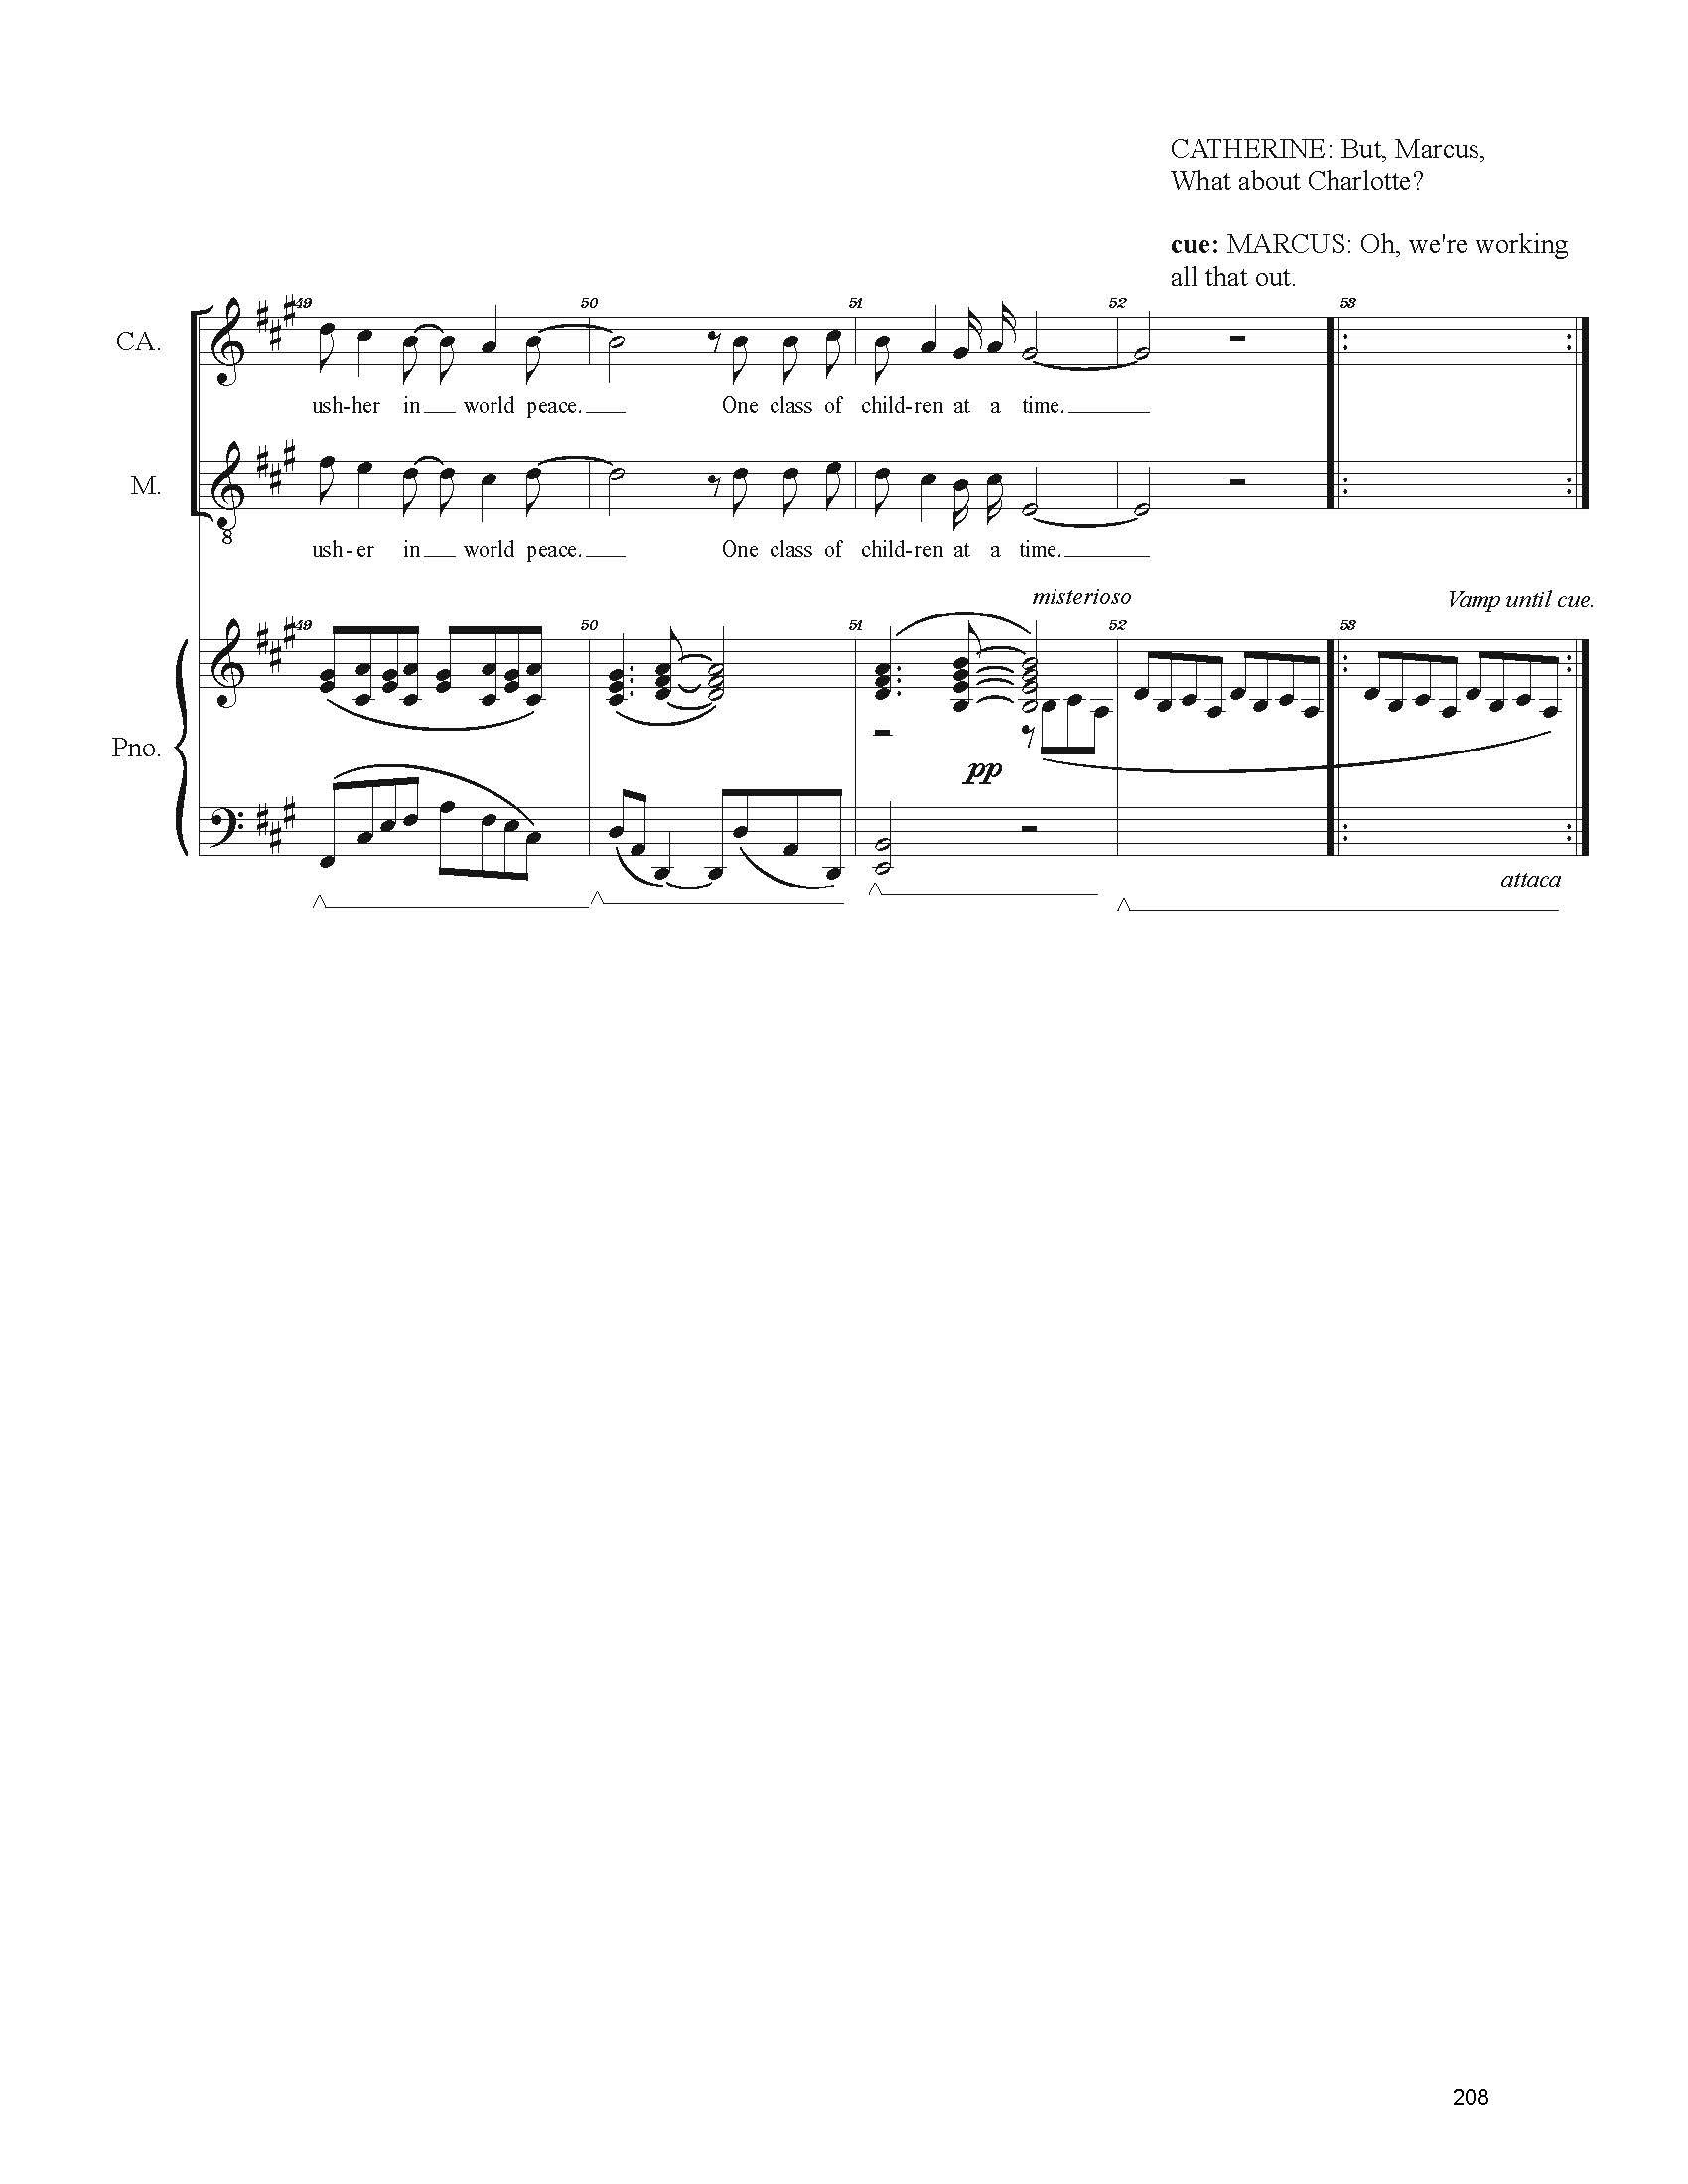 FULL PIANO VOCAL SCORE DRAFT 1 - Score_Page_208.jpg